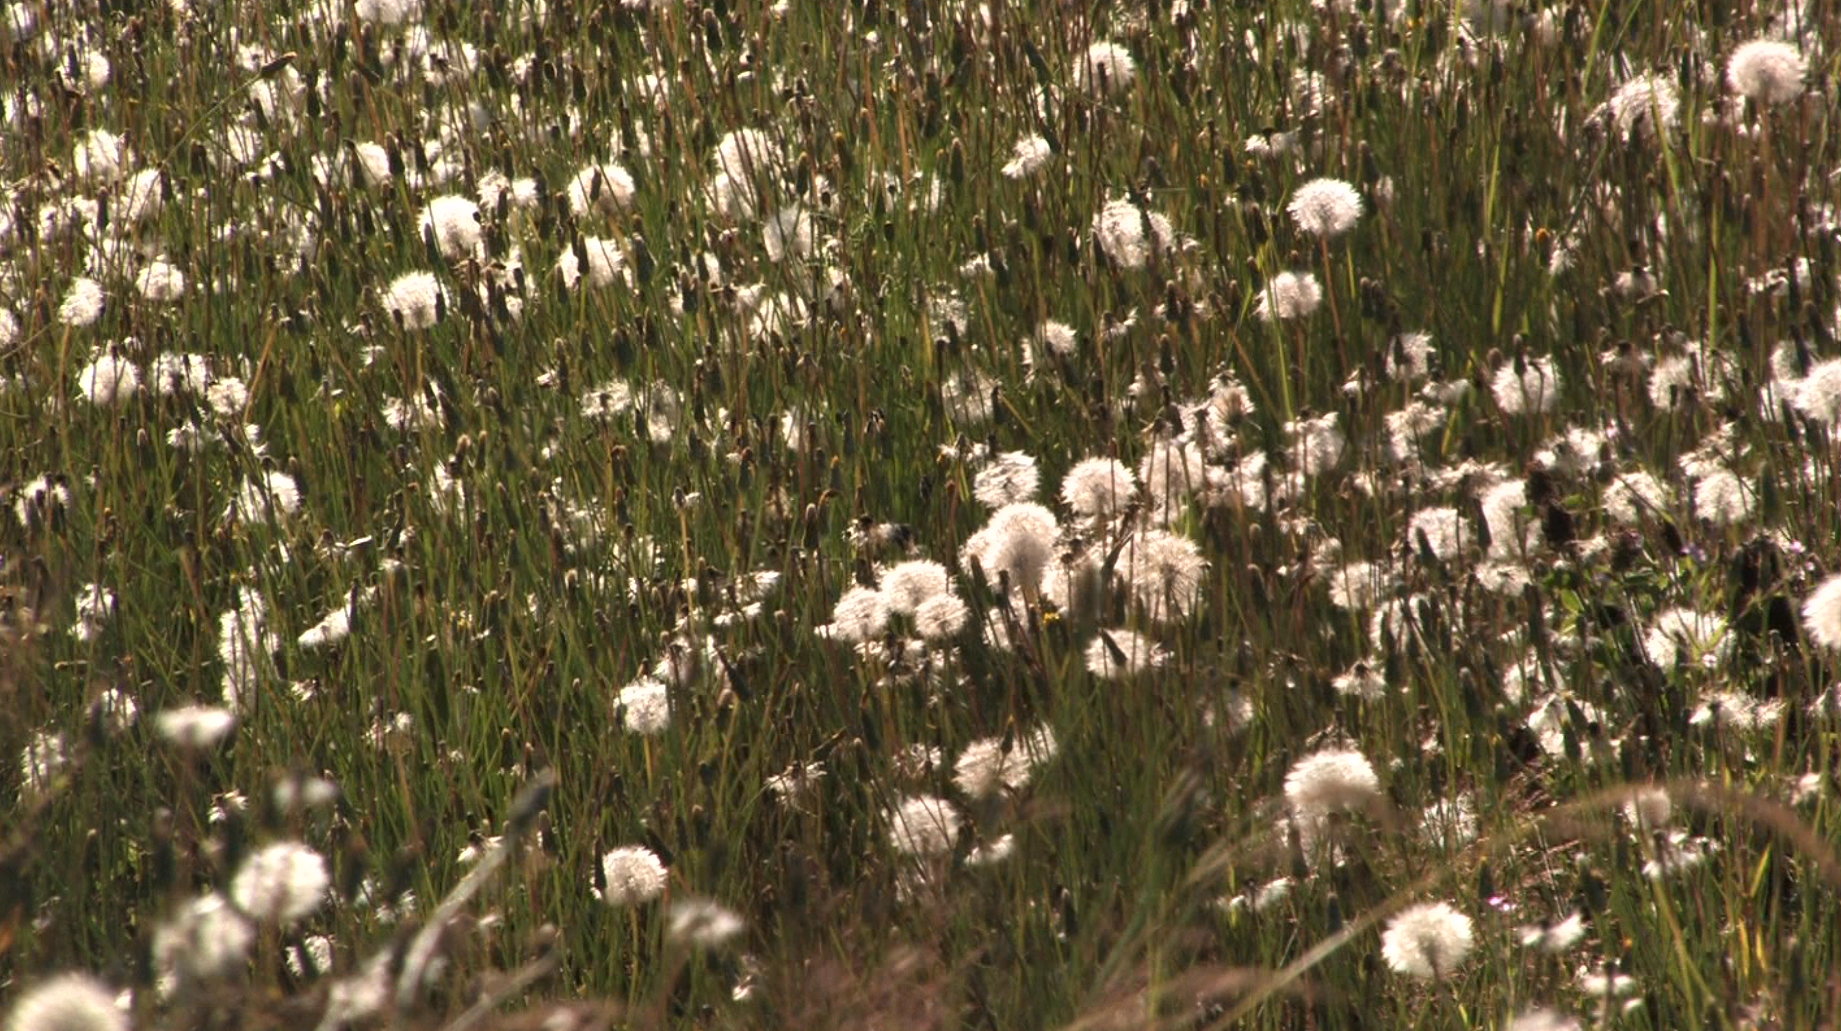 A Field of Dandelions at Little Mountain